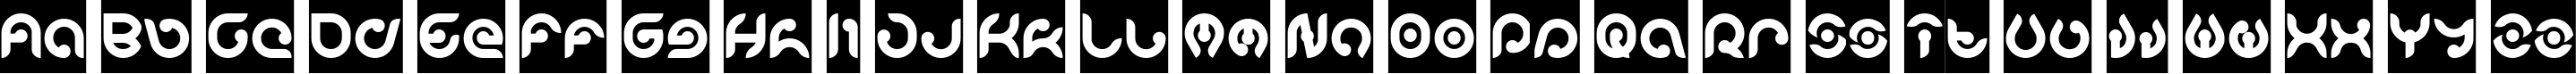 Пример написания английского алфавита шрифтом KIOSHIMA-Inverse